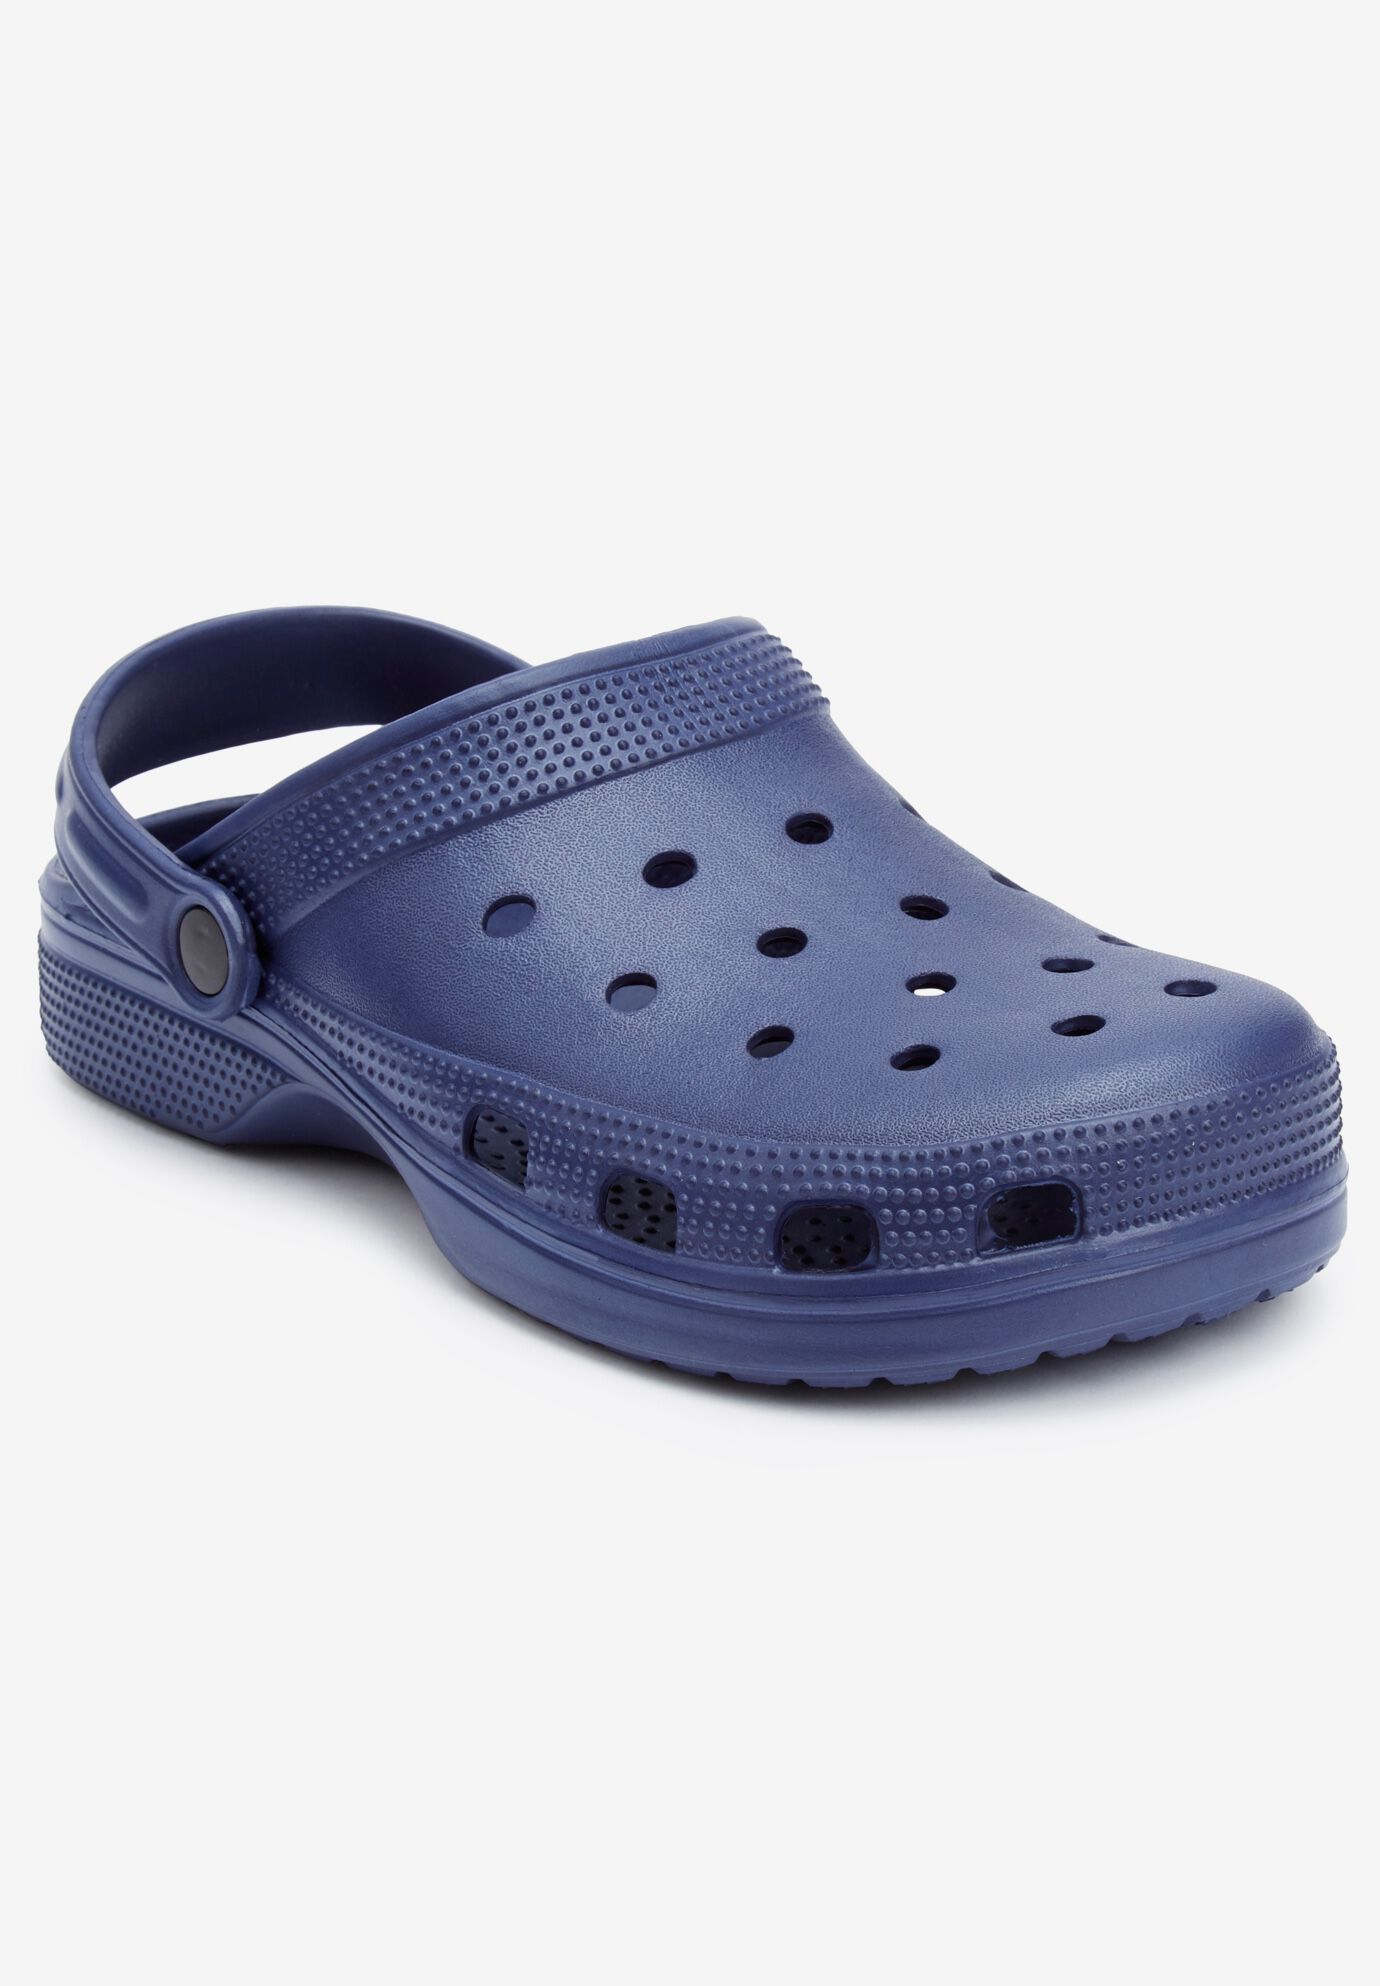 wide width water shoes